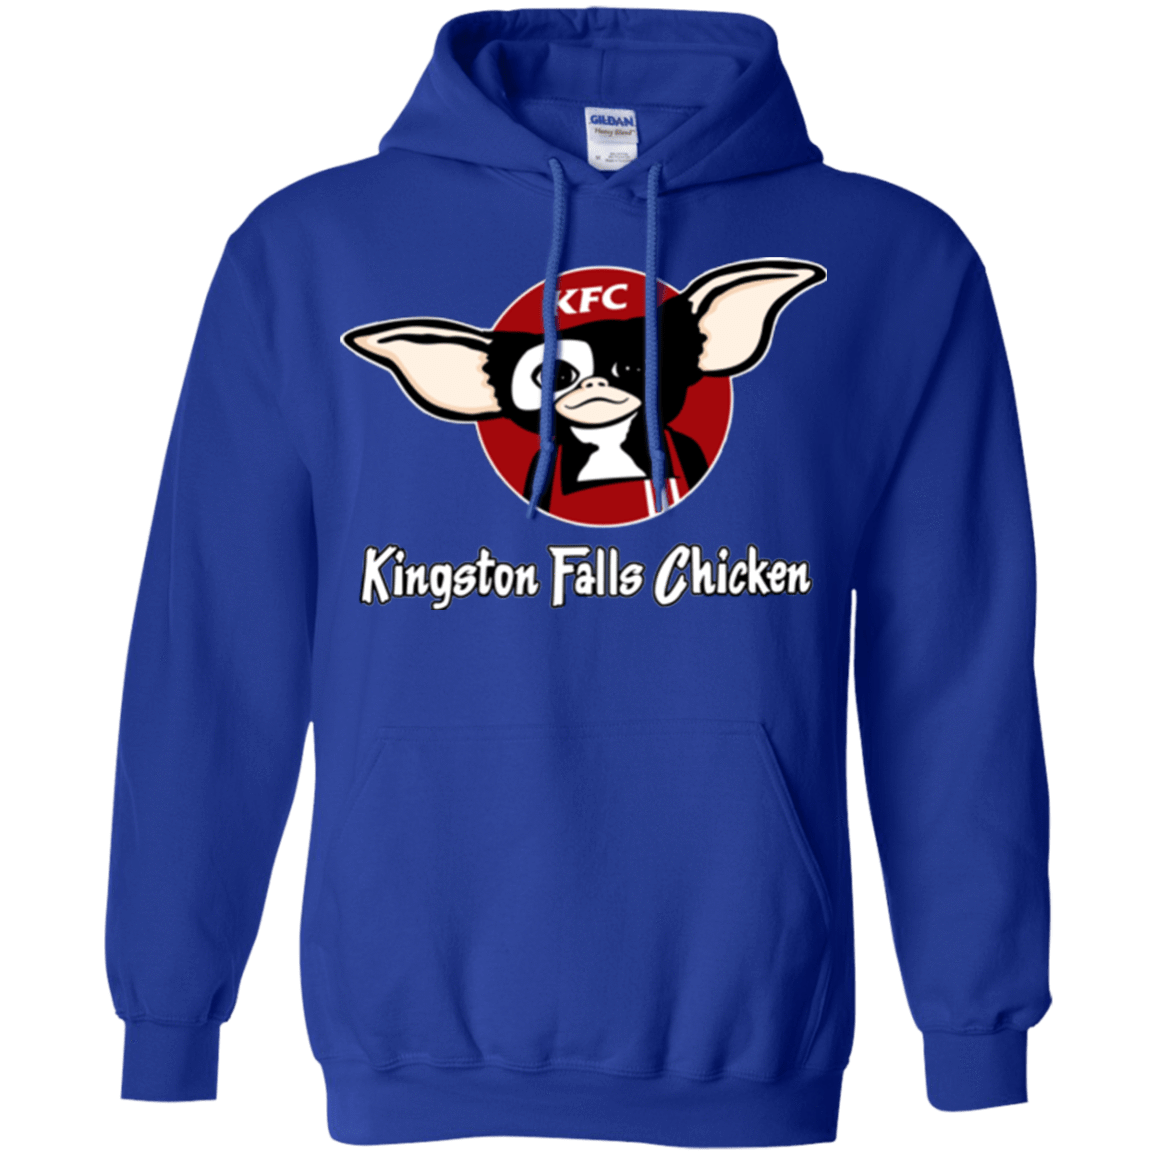 Sweatshirts Royal / Small Kingston Falls Chicken Pullover Hoodie